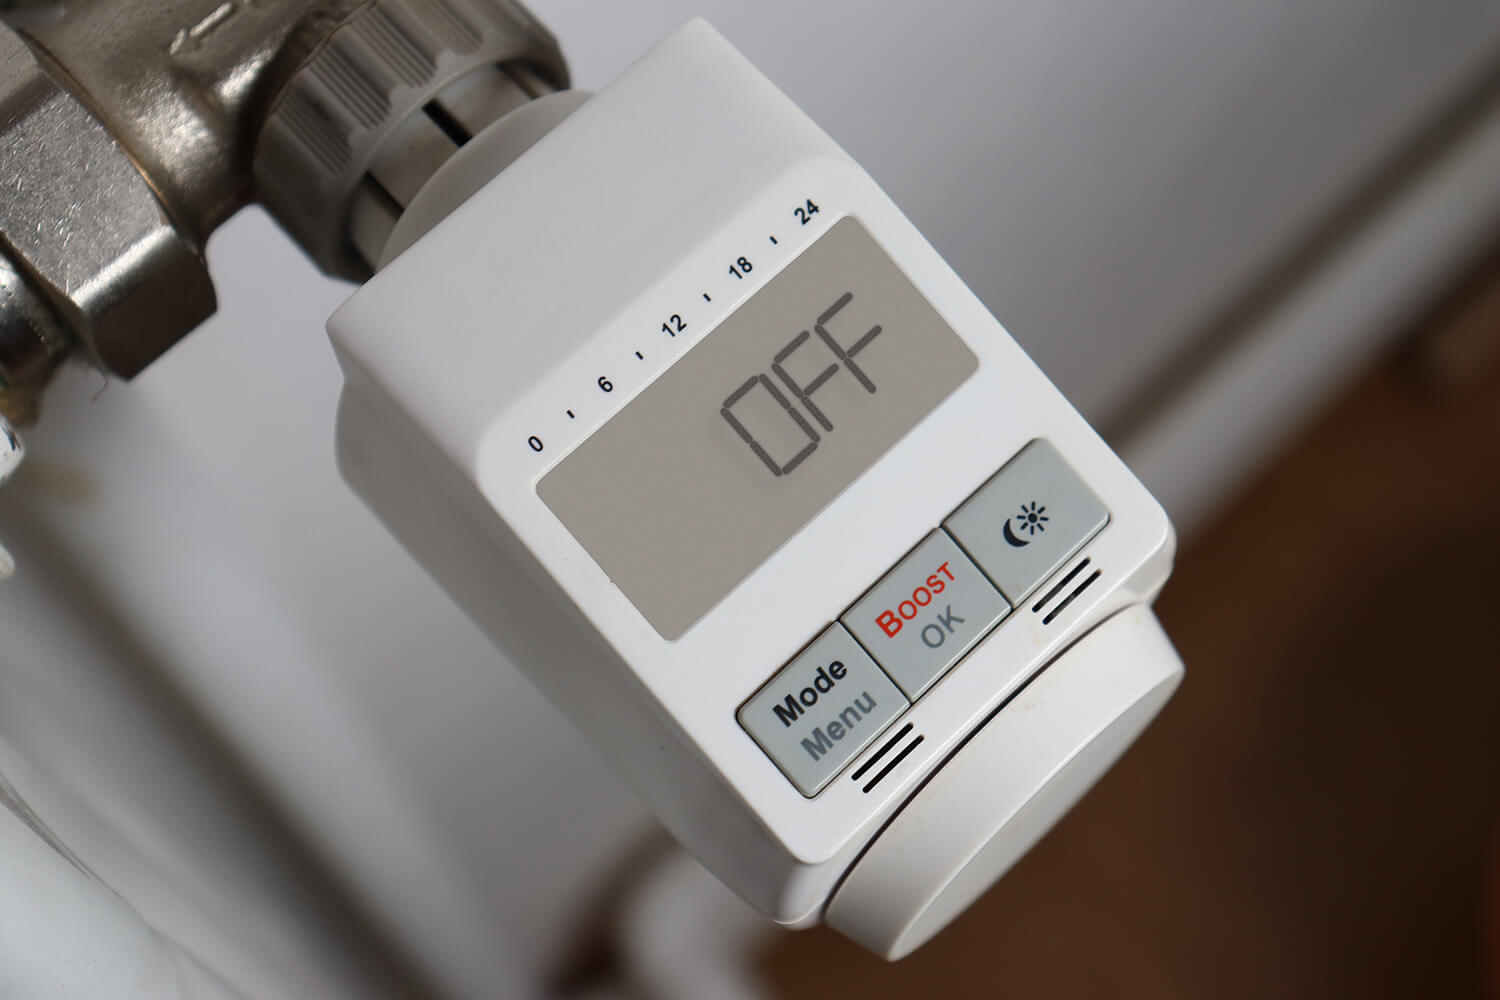 Smart thermostat still hasn’t adapted